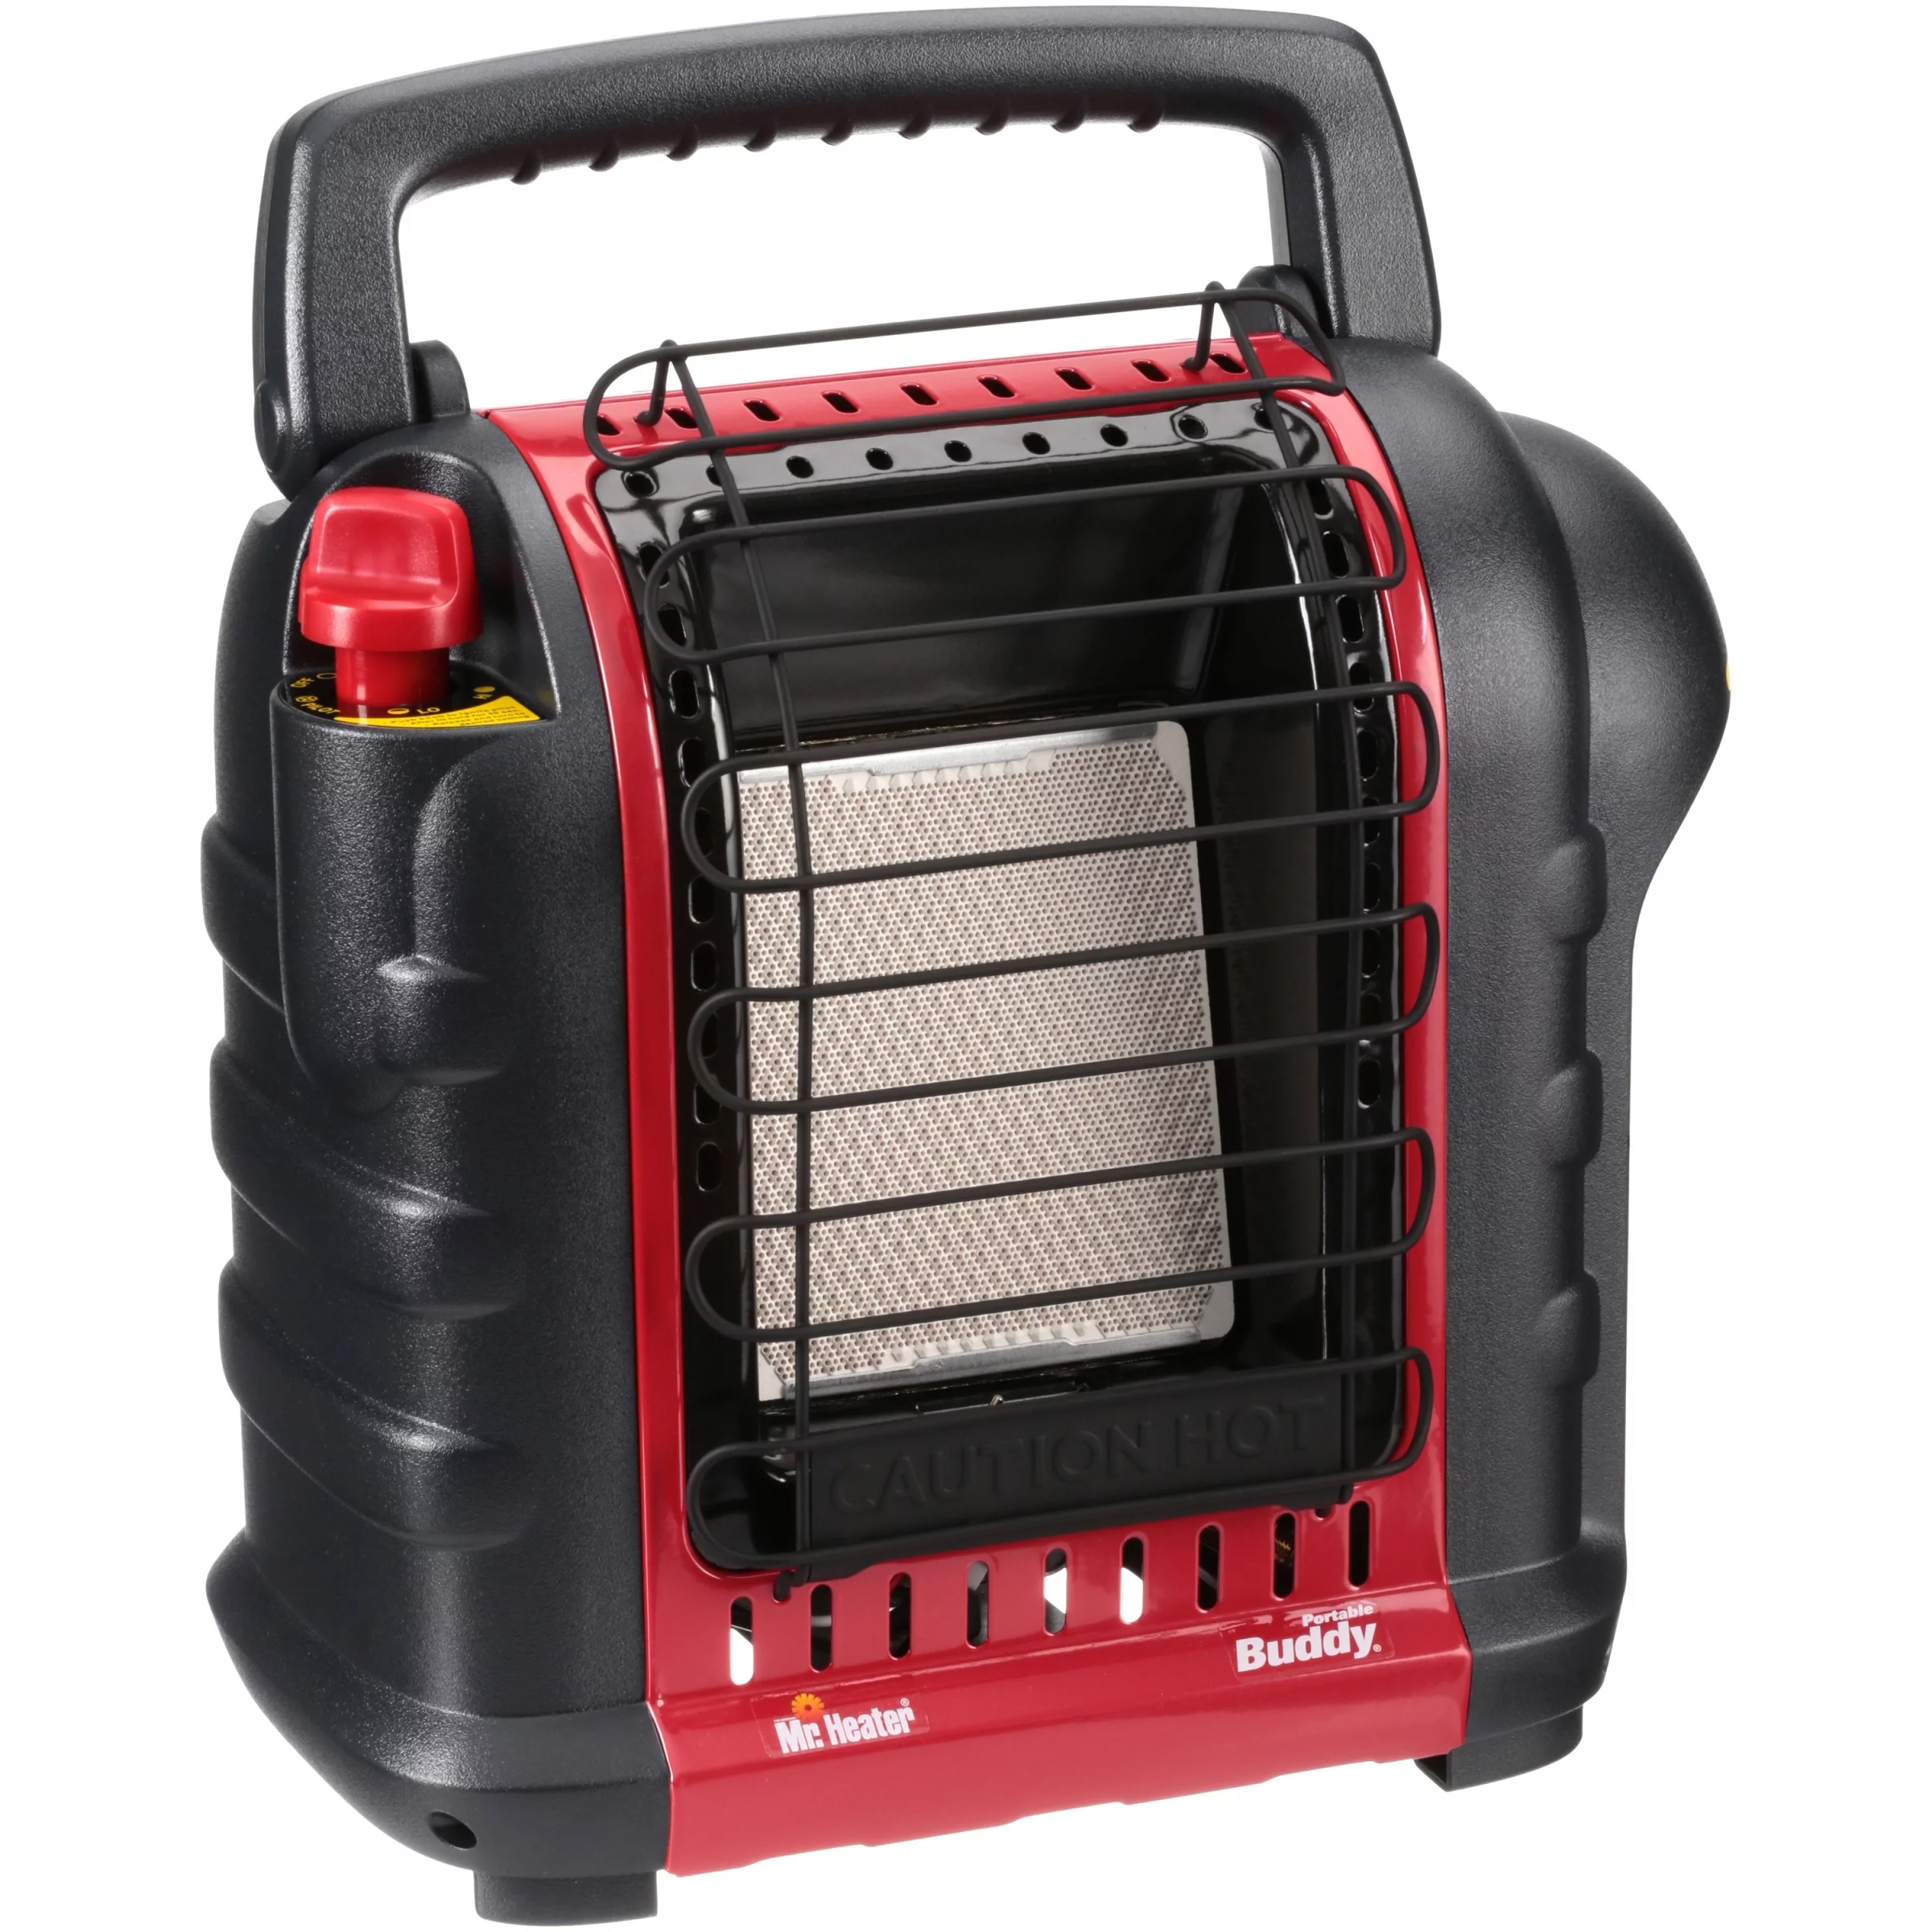 Mr. Heater Portable Buddy Radiant Heater 4-9K BTU